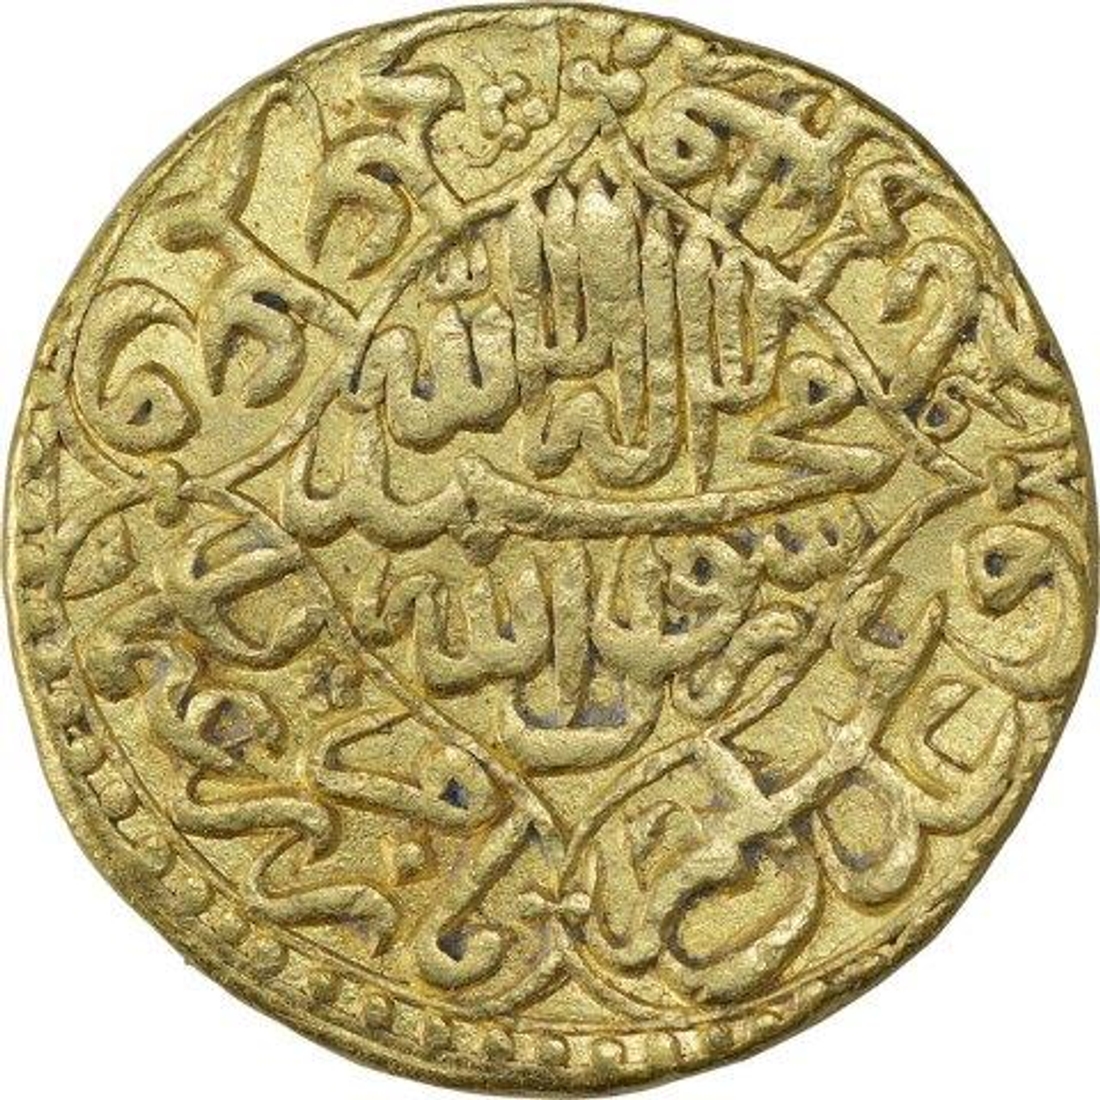 Rare Gold Mohur Coin of Shah Jahan of Akbarabad Mint.